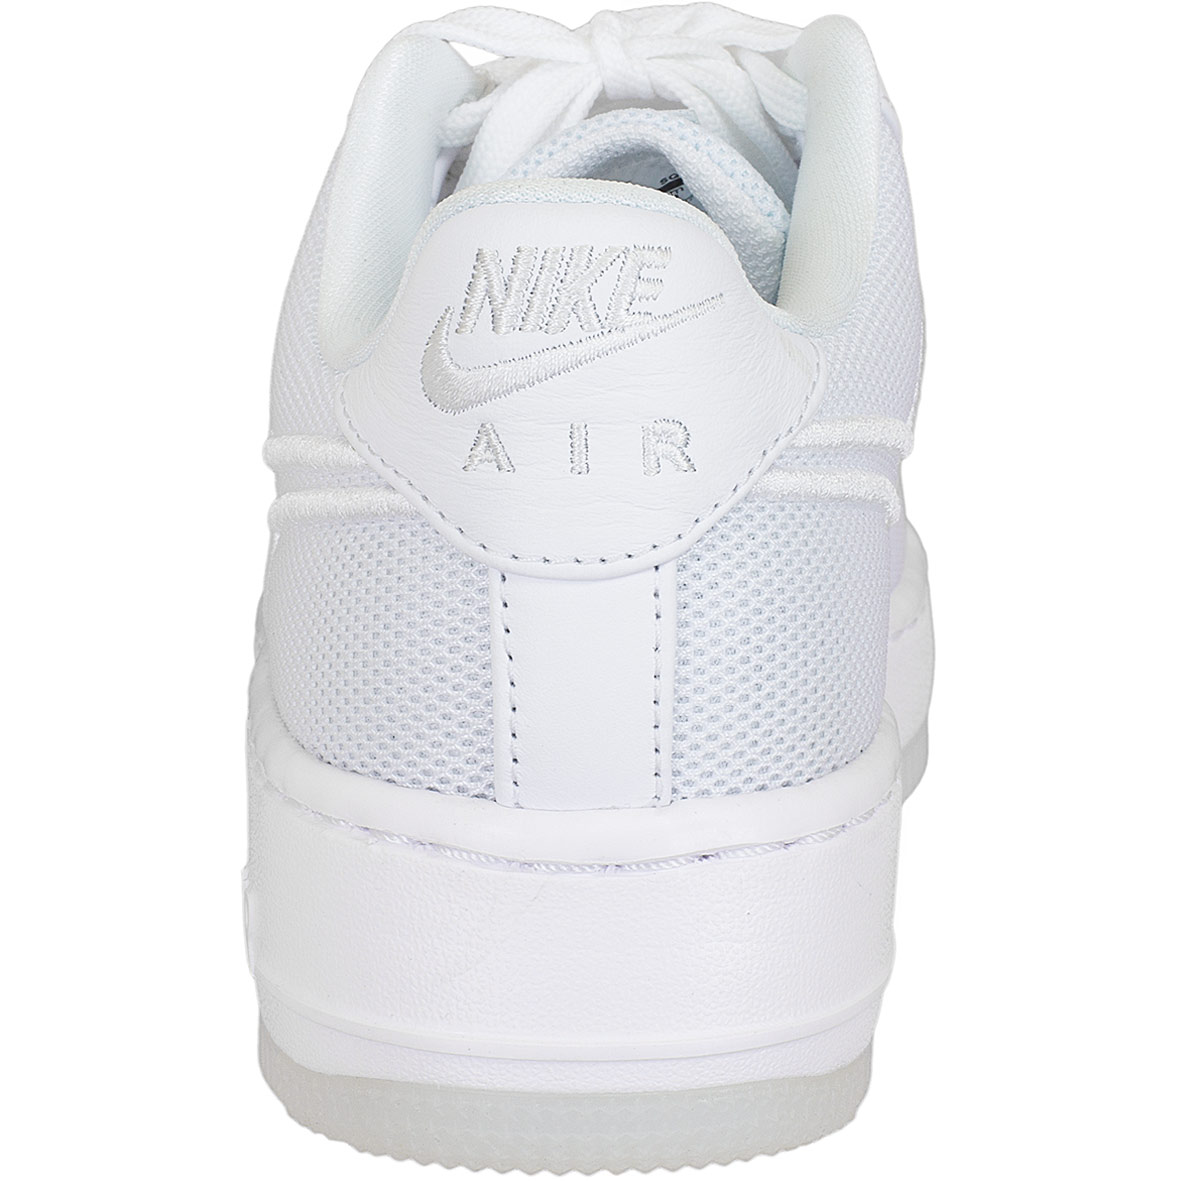 ☆ Nike Damen Sneaker Air Force 1 Low Upstep BR weiß/weiß - hier bestellen!